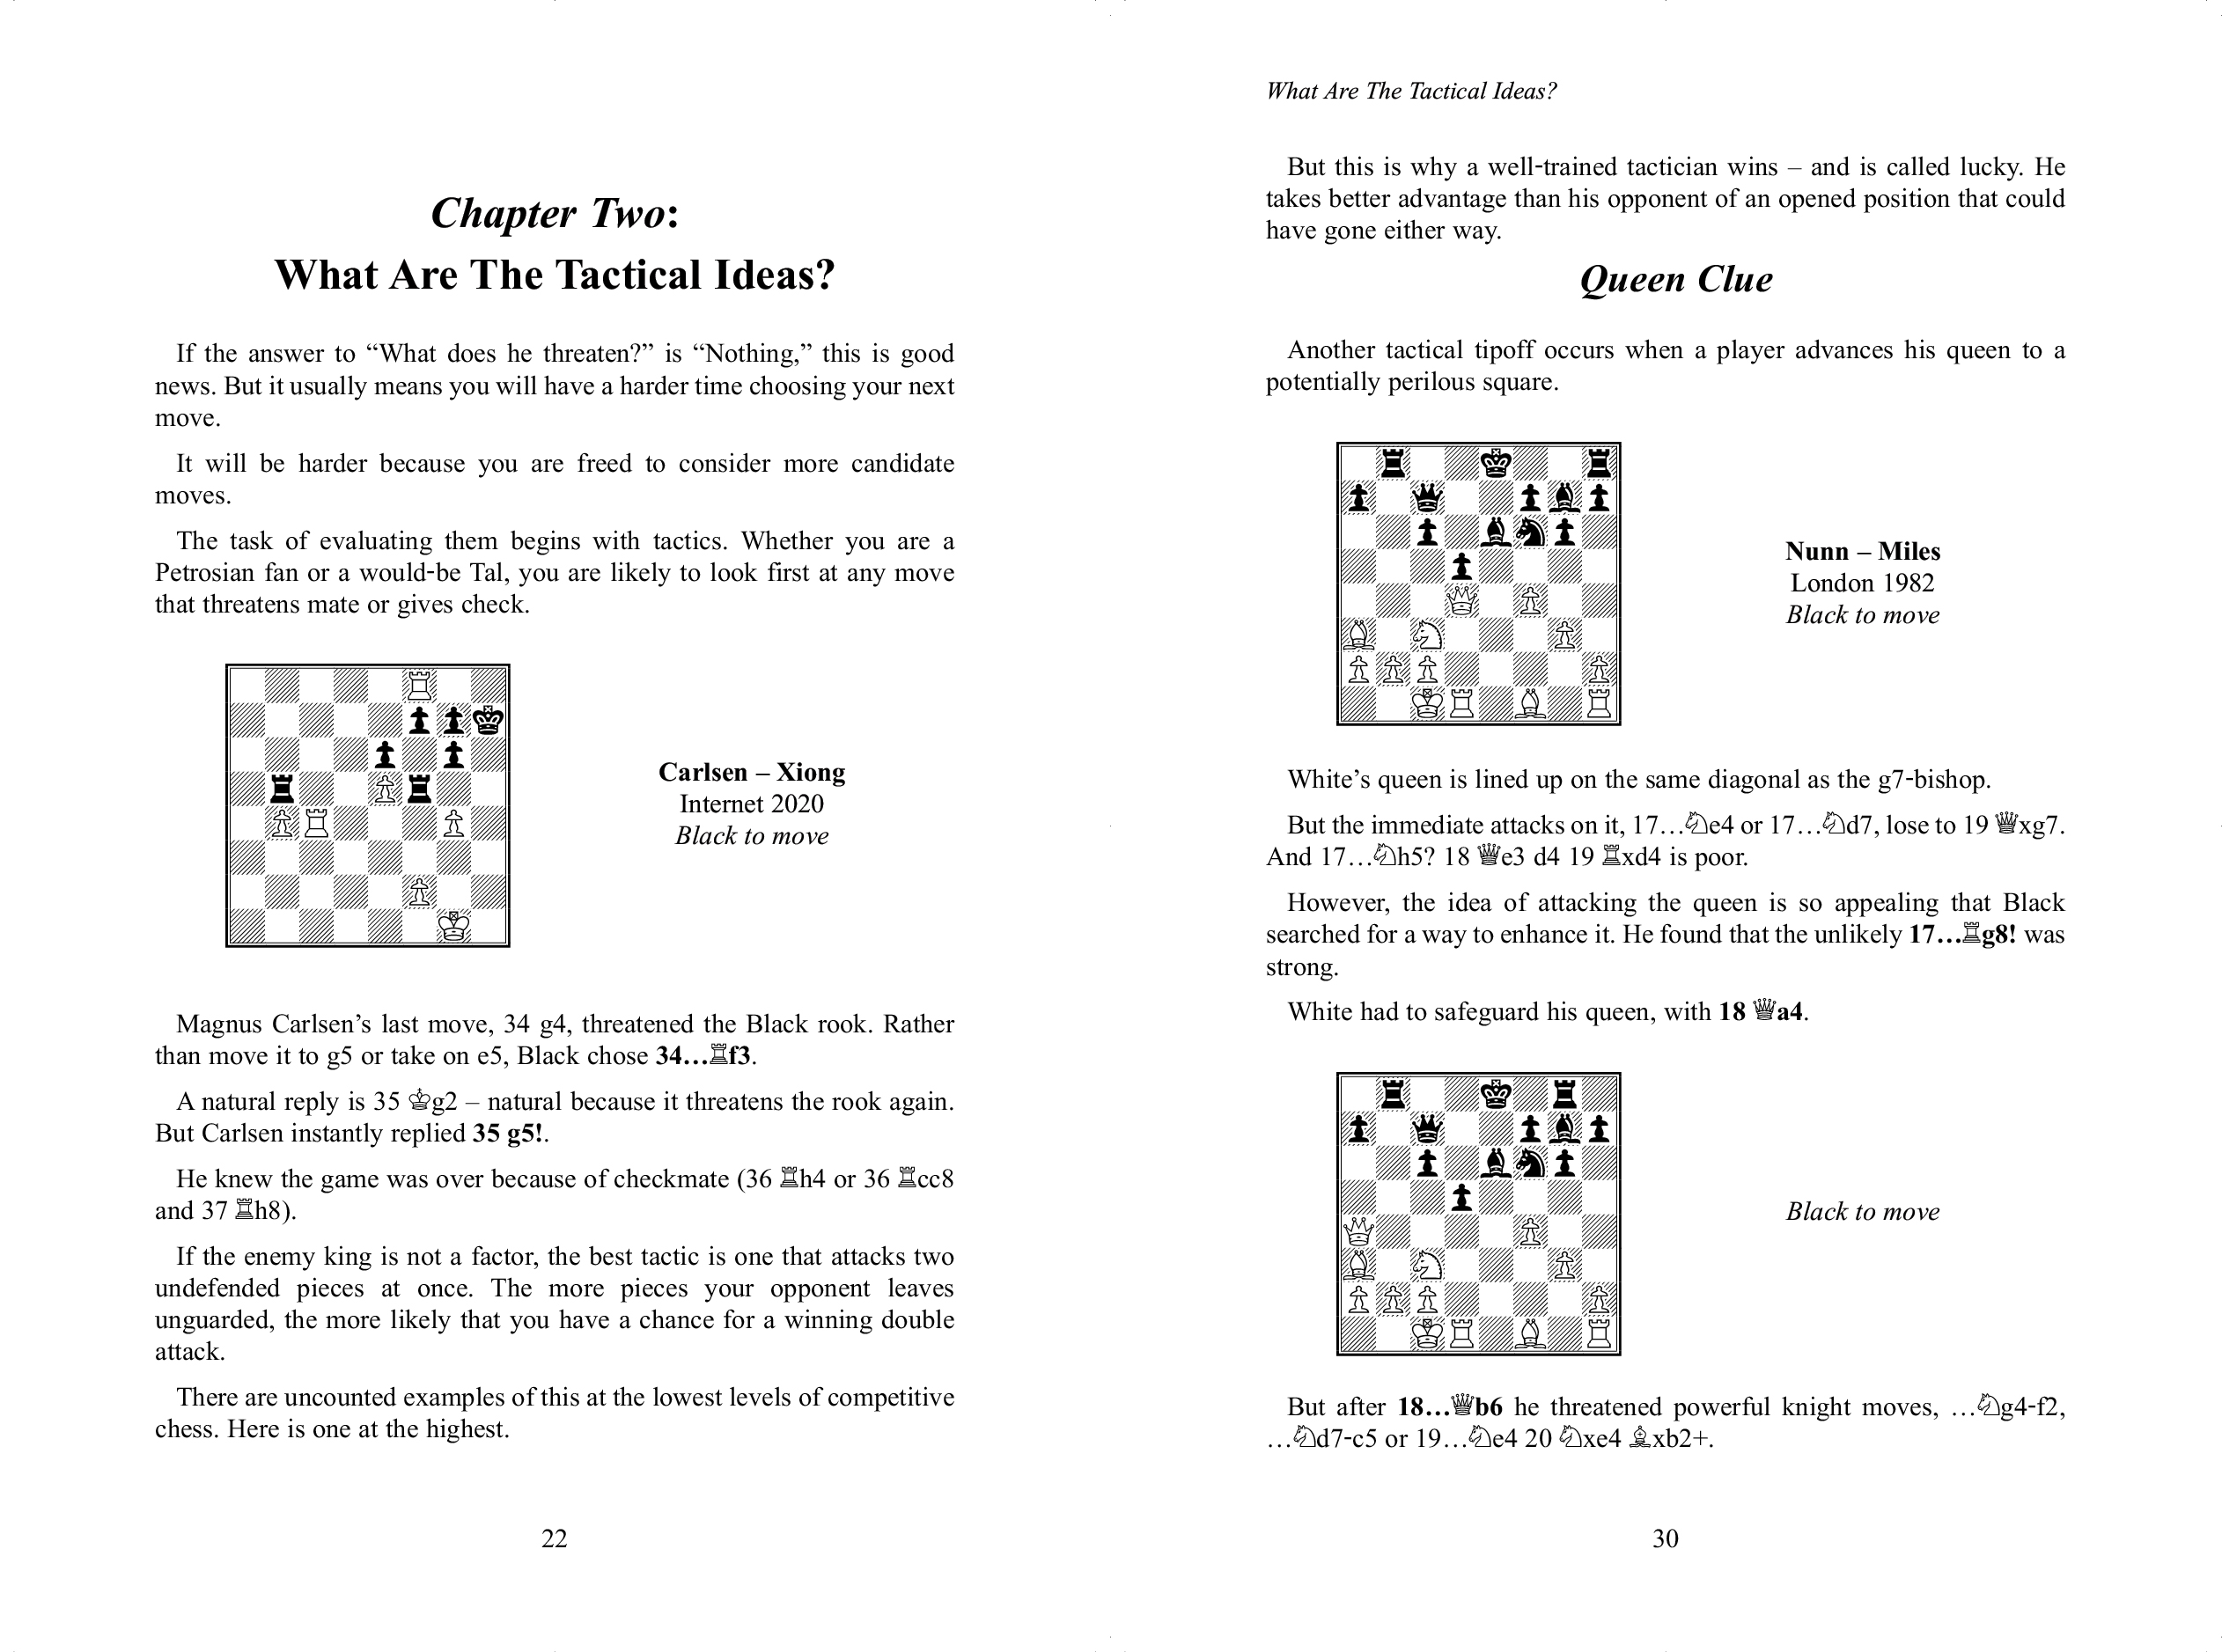 The Chessmaster Checklist